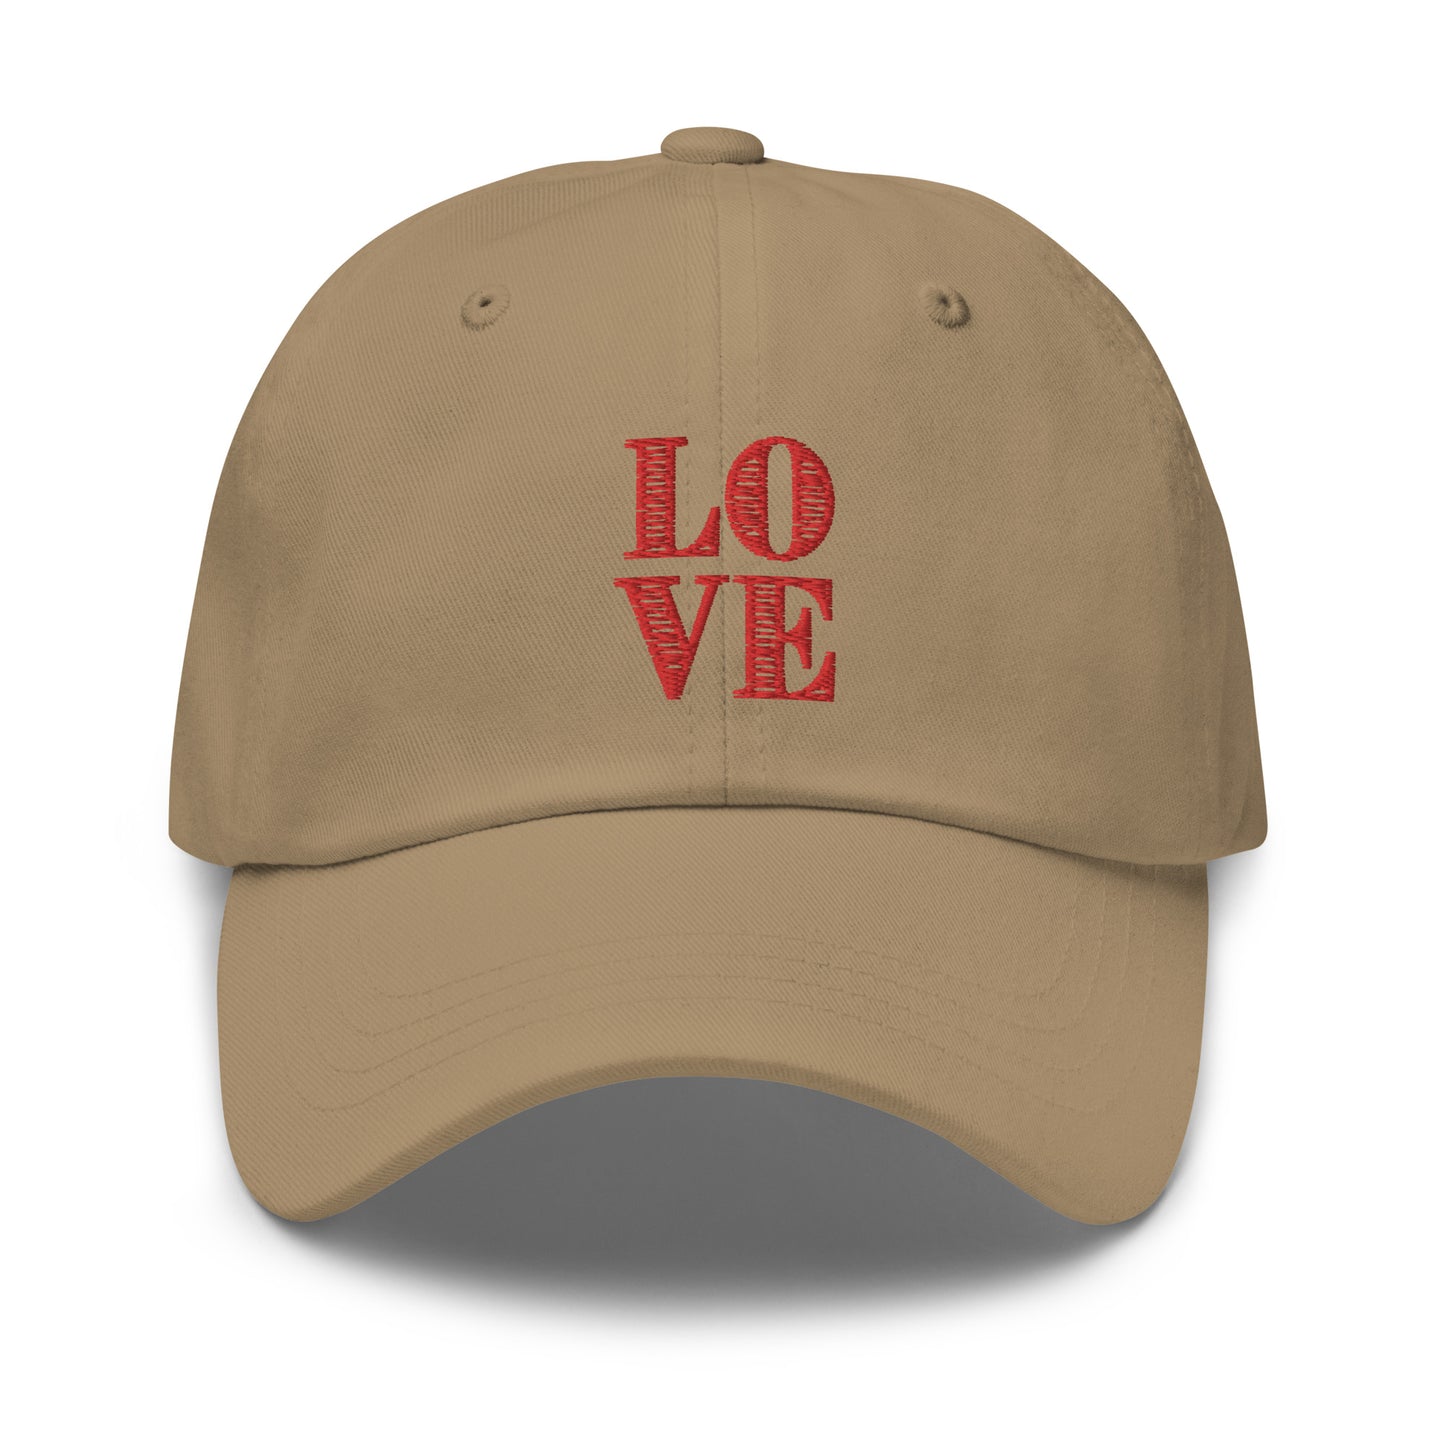 Love Embordered Hat